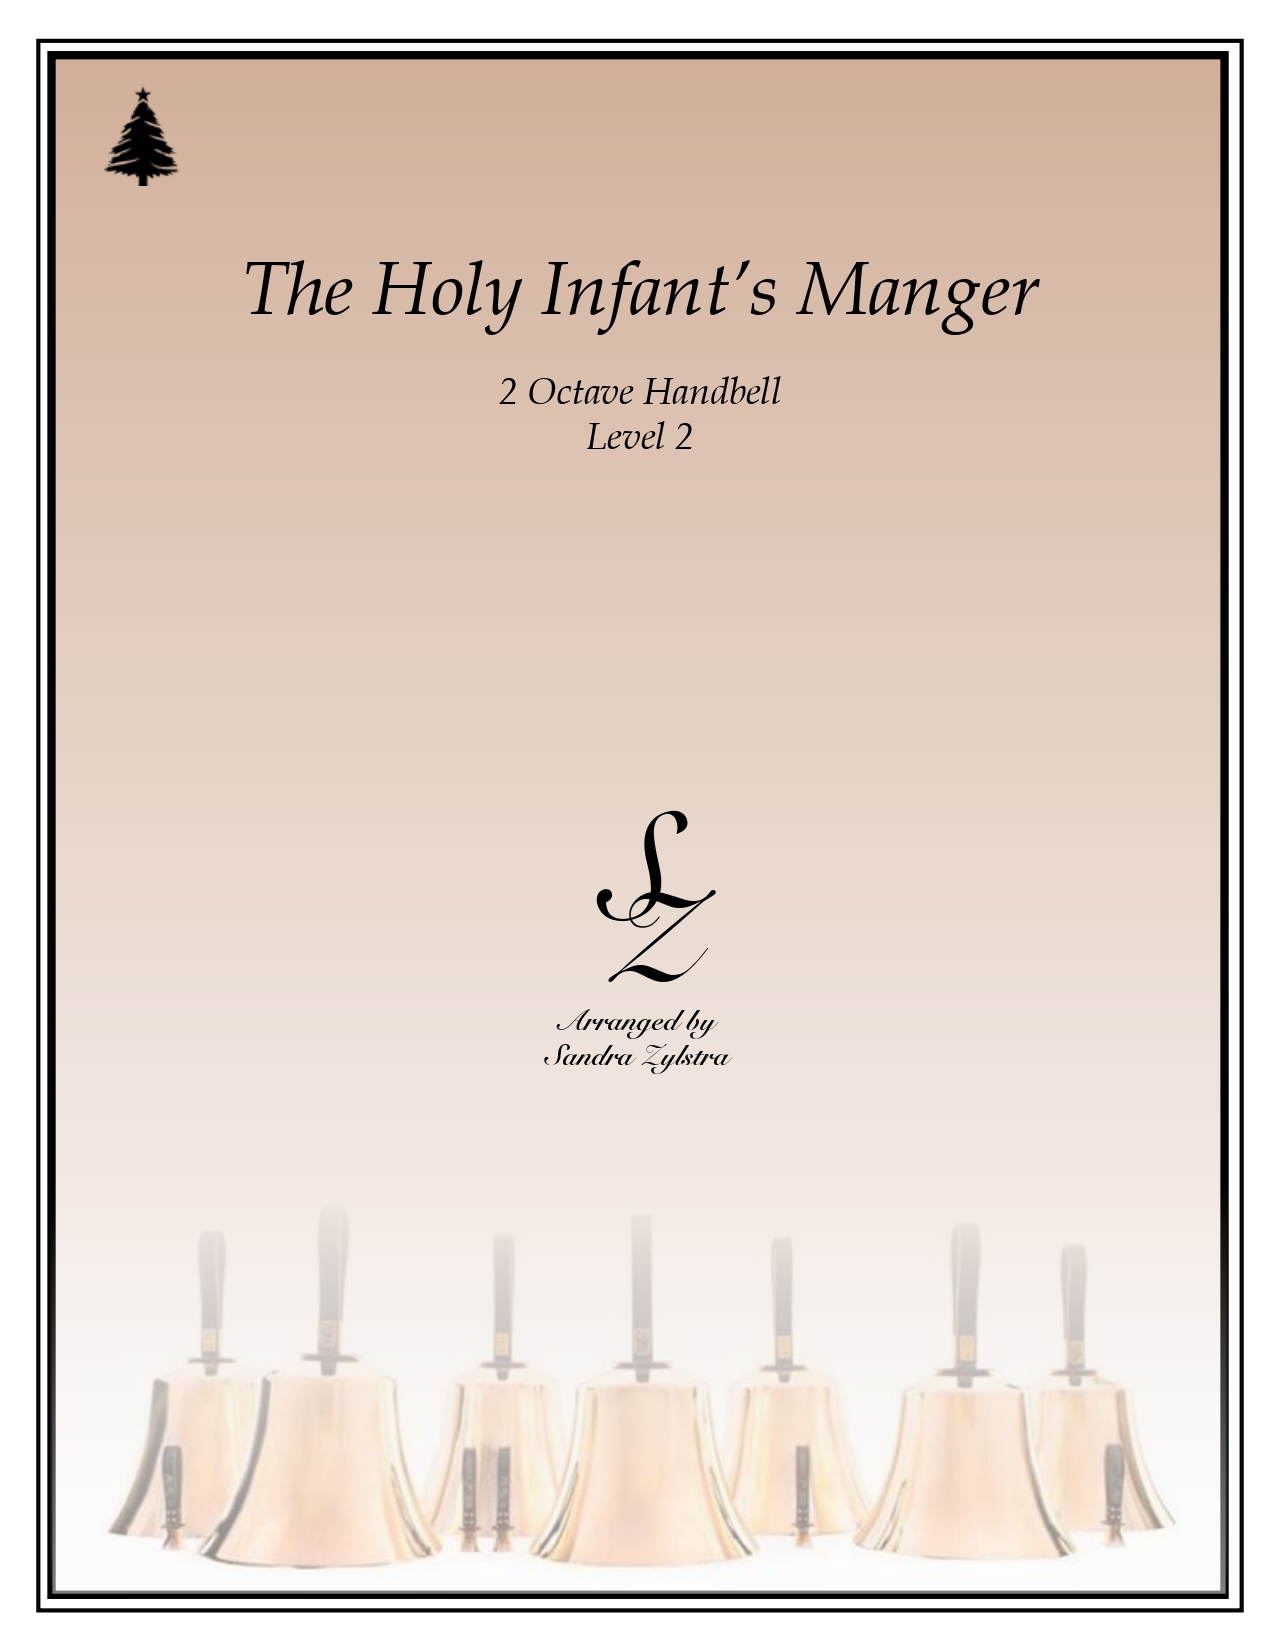 The Holy Infants Manger 2 octave handbells cover page 00011